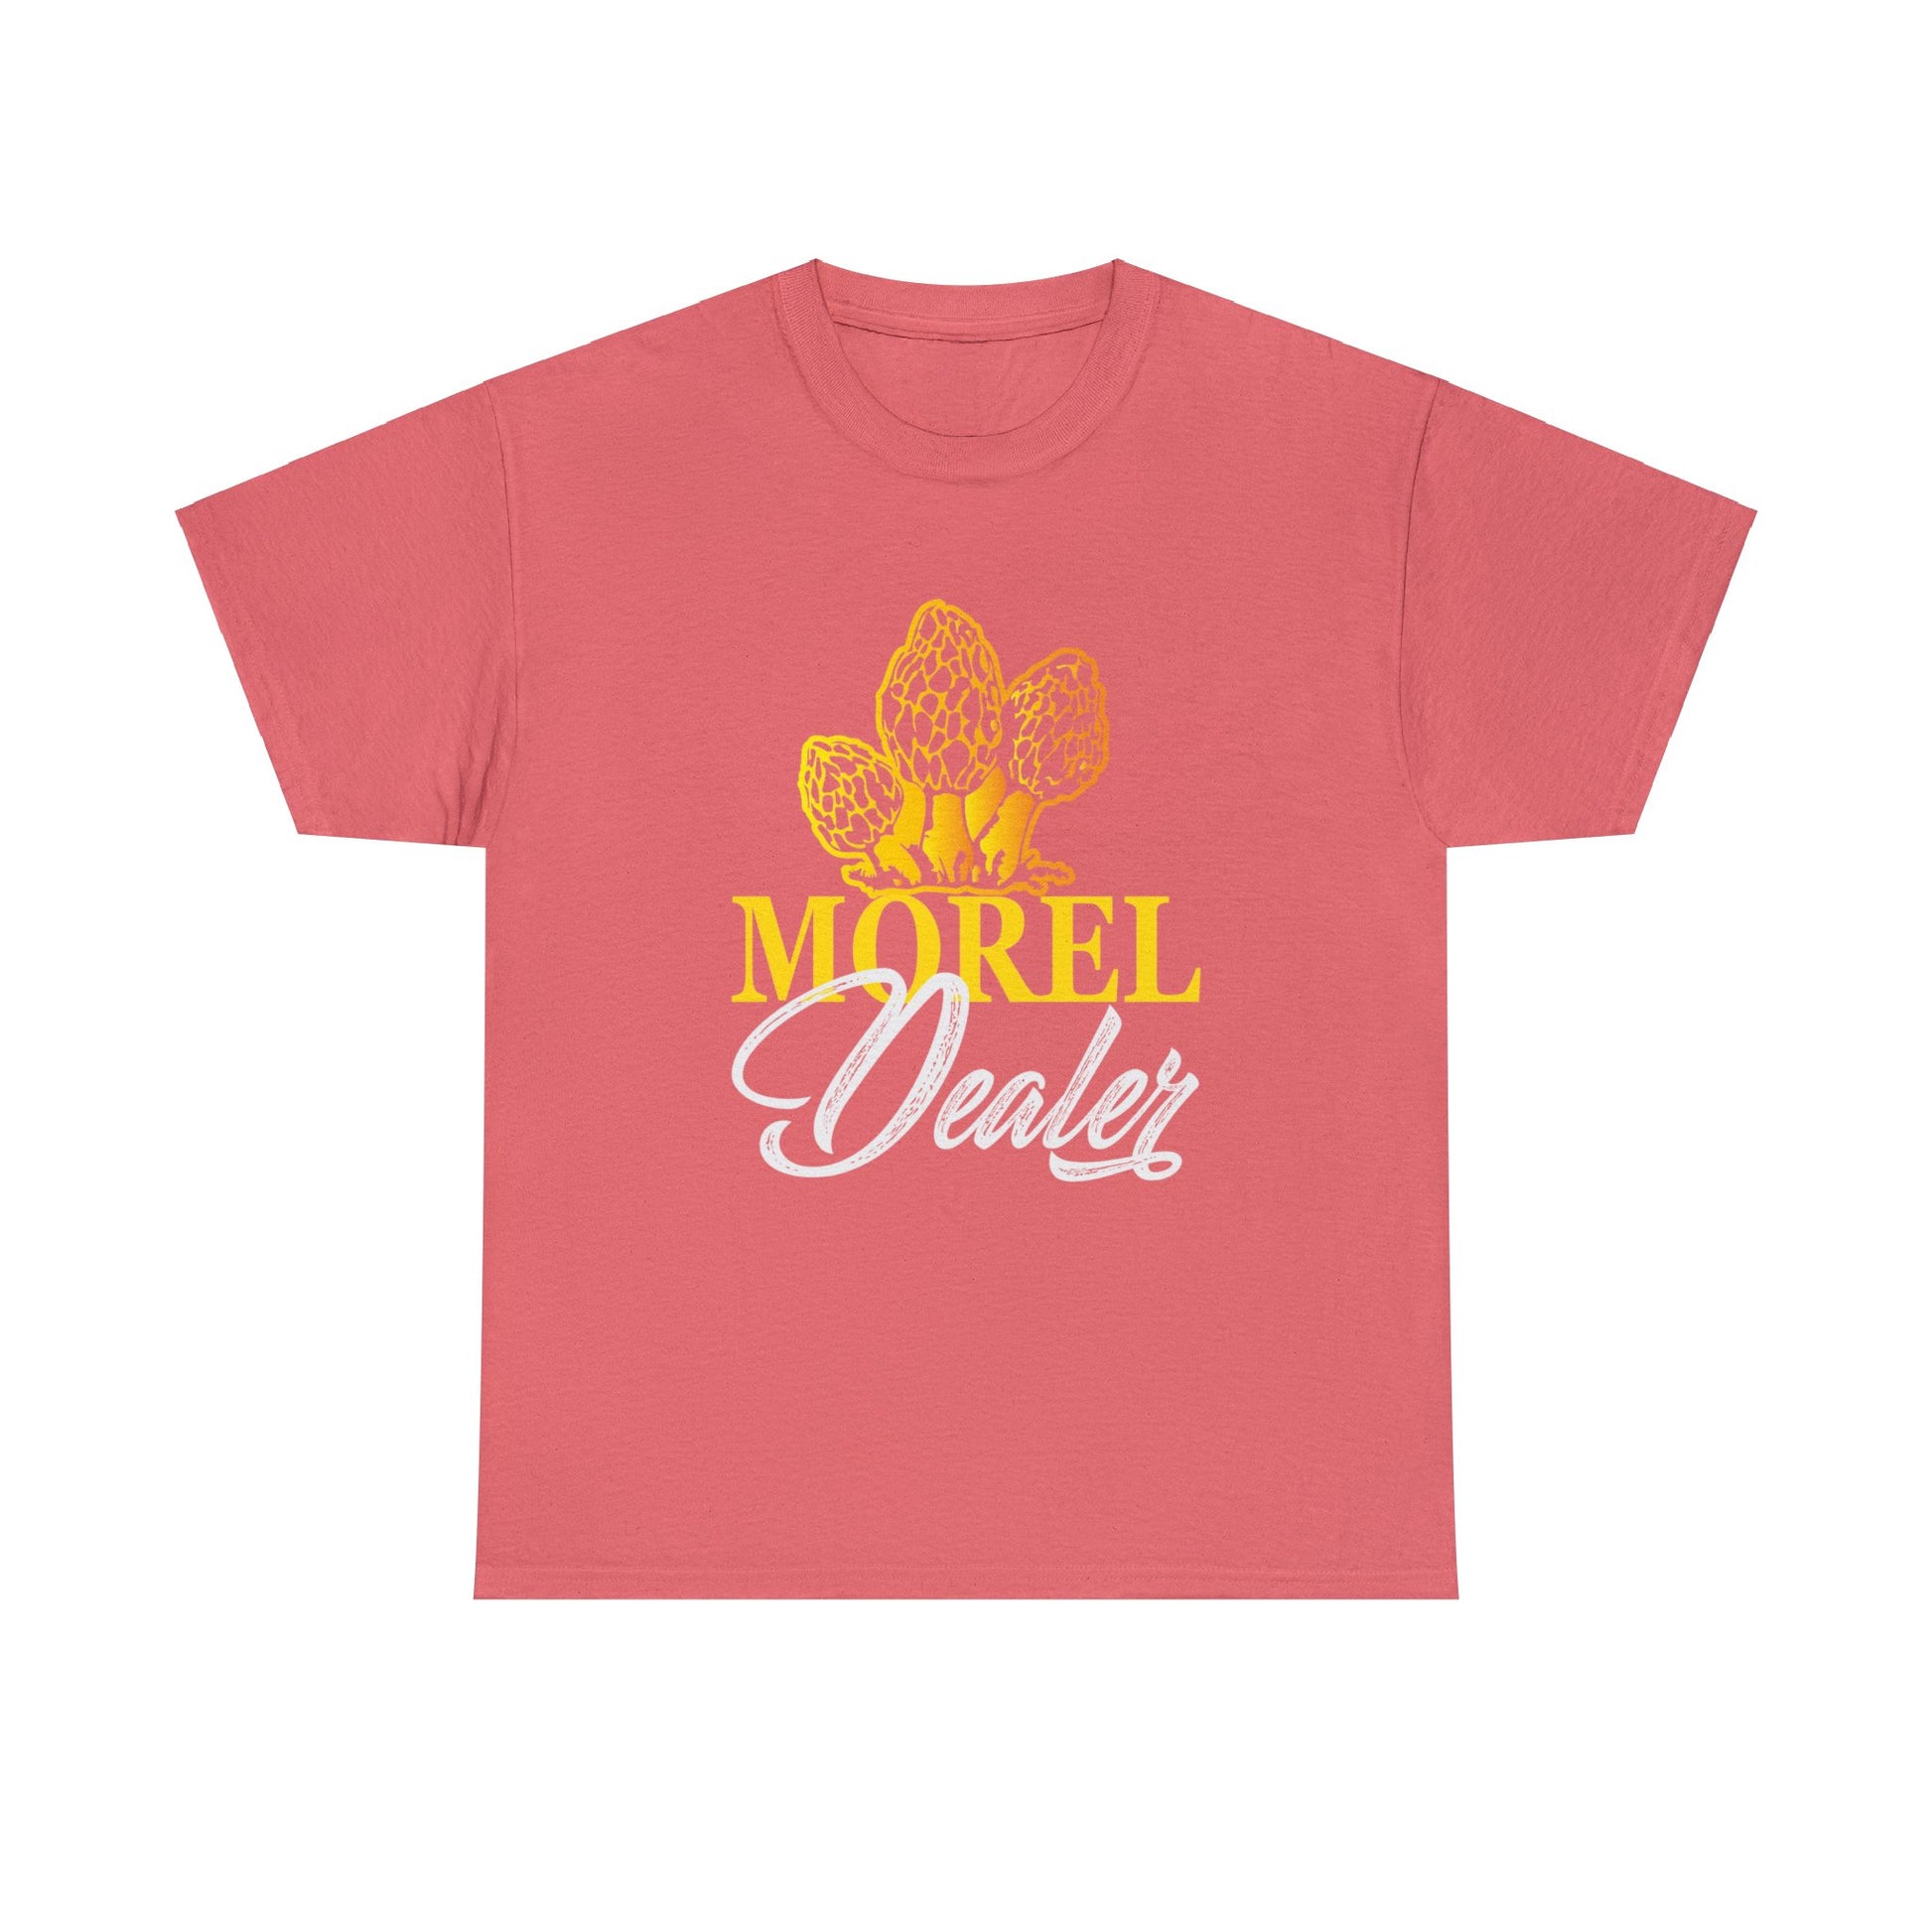 Cotton t-shirt with morel mushroom graphic